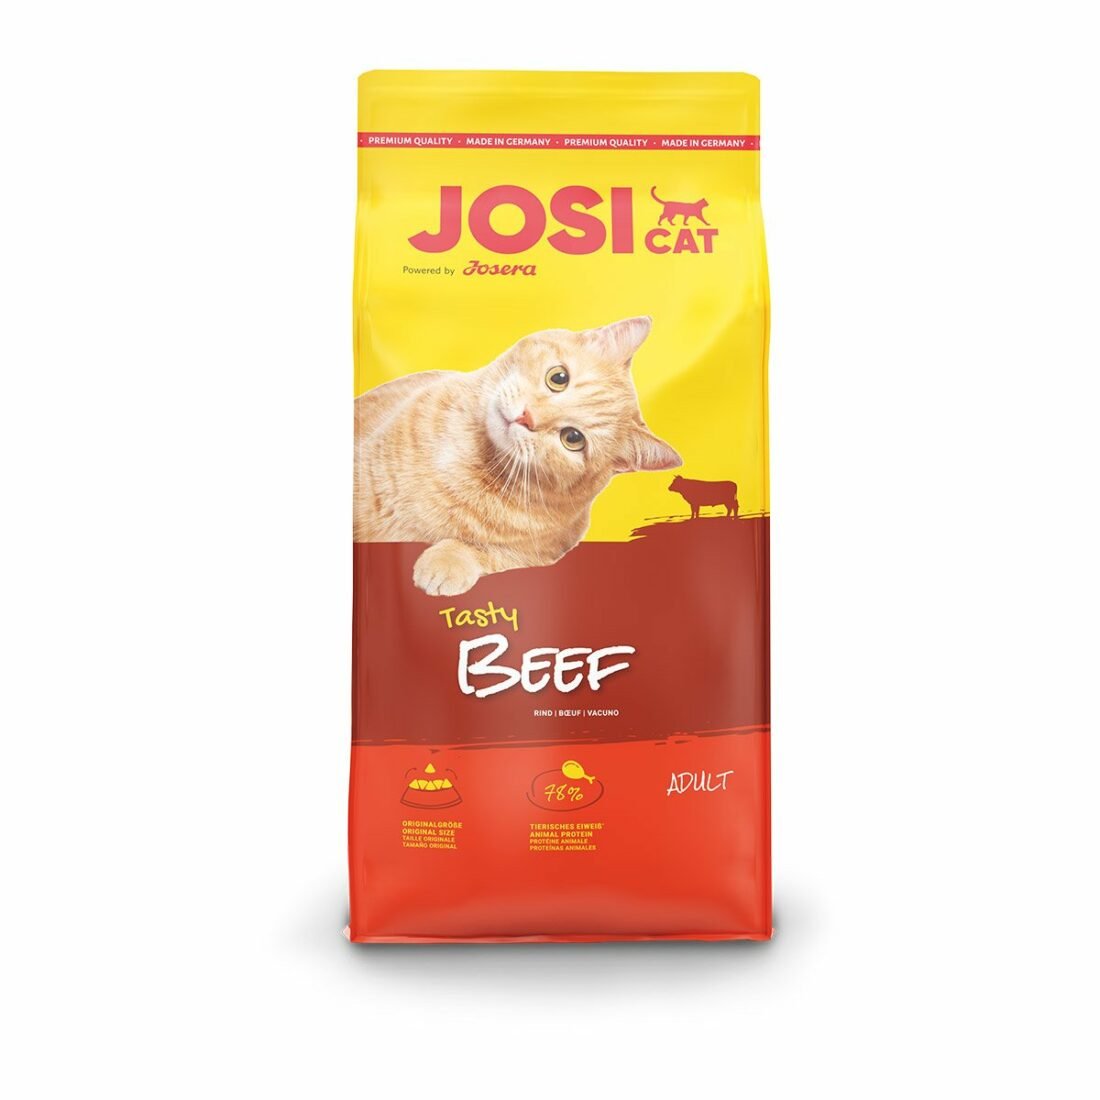 JosiCat Tasty Beef 2 ×